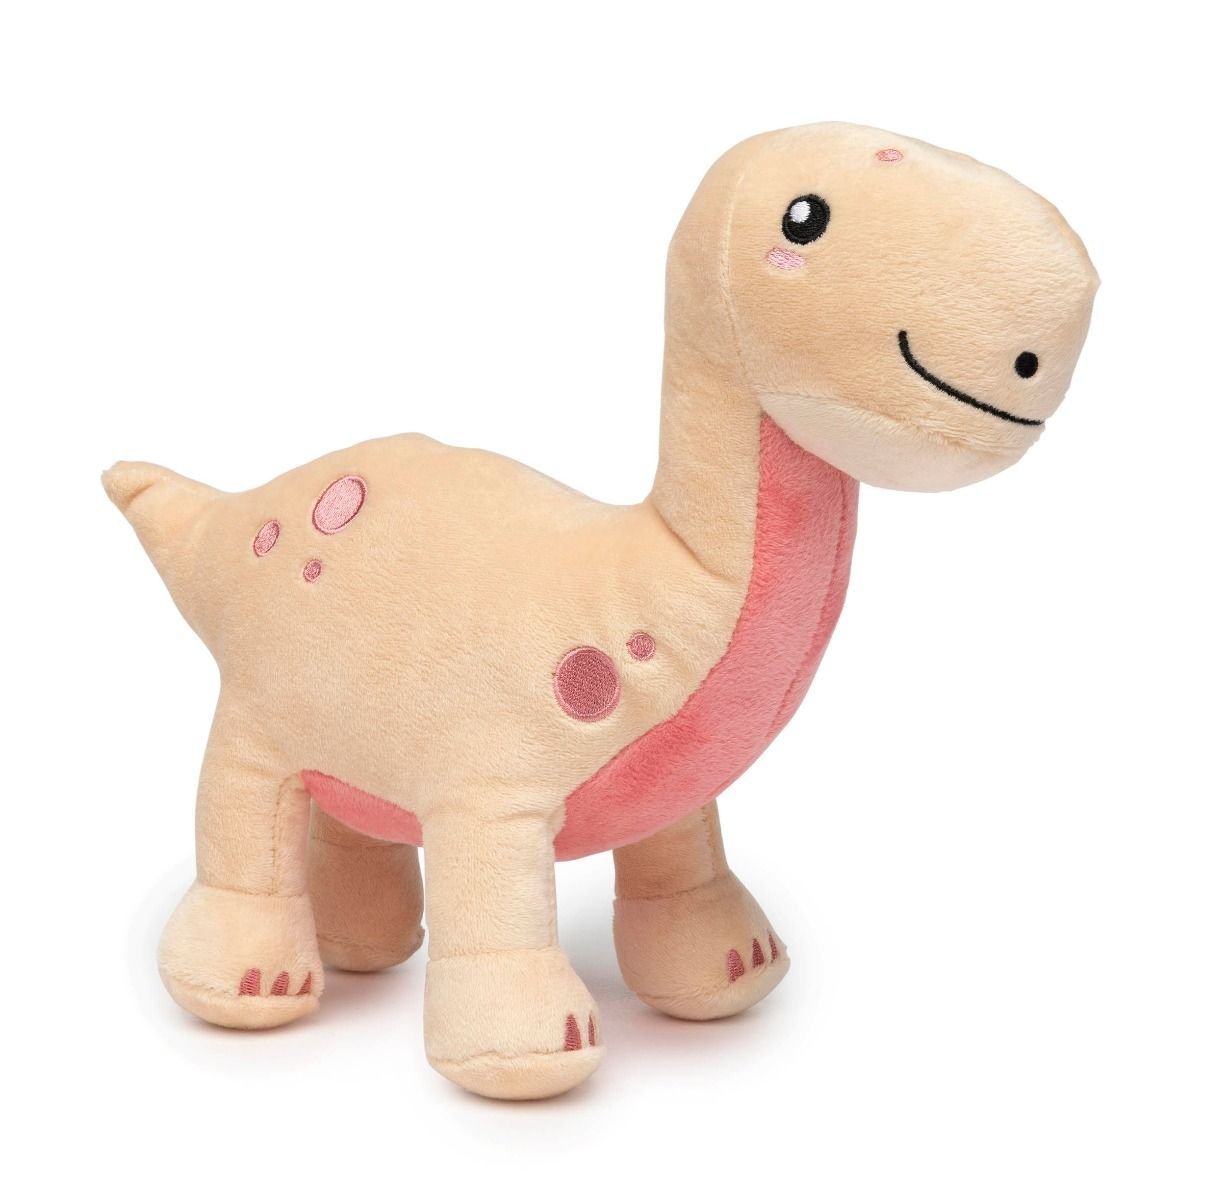 Dino - Brienne - The Brontosaurus